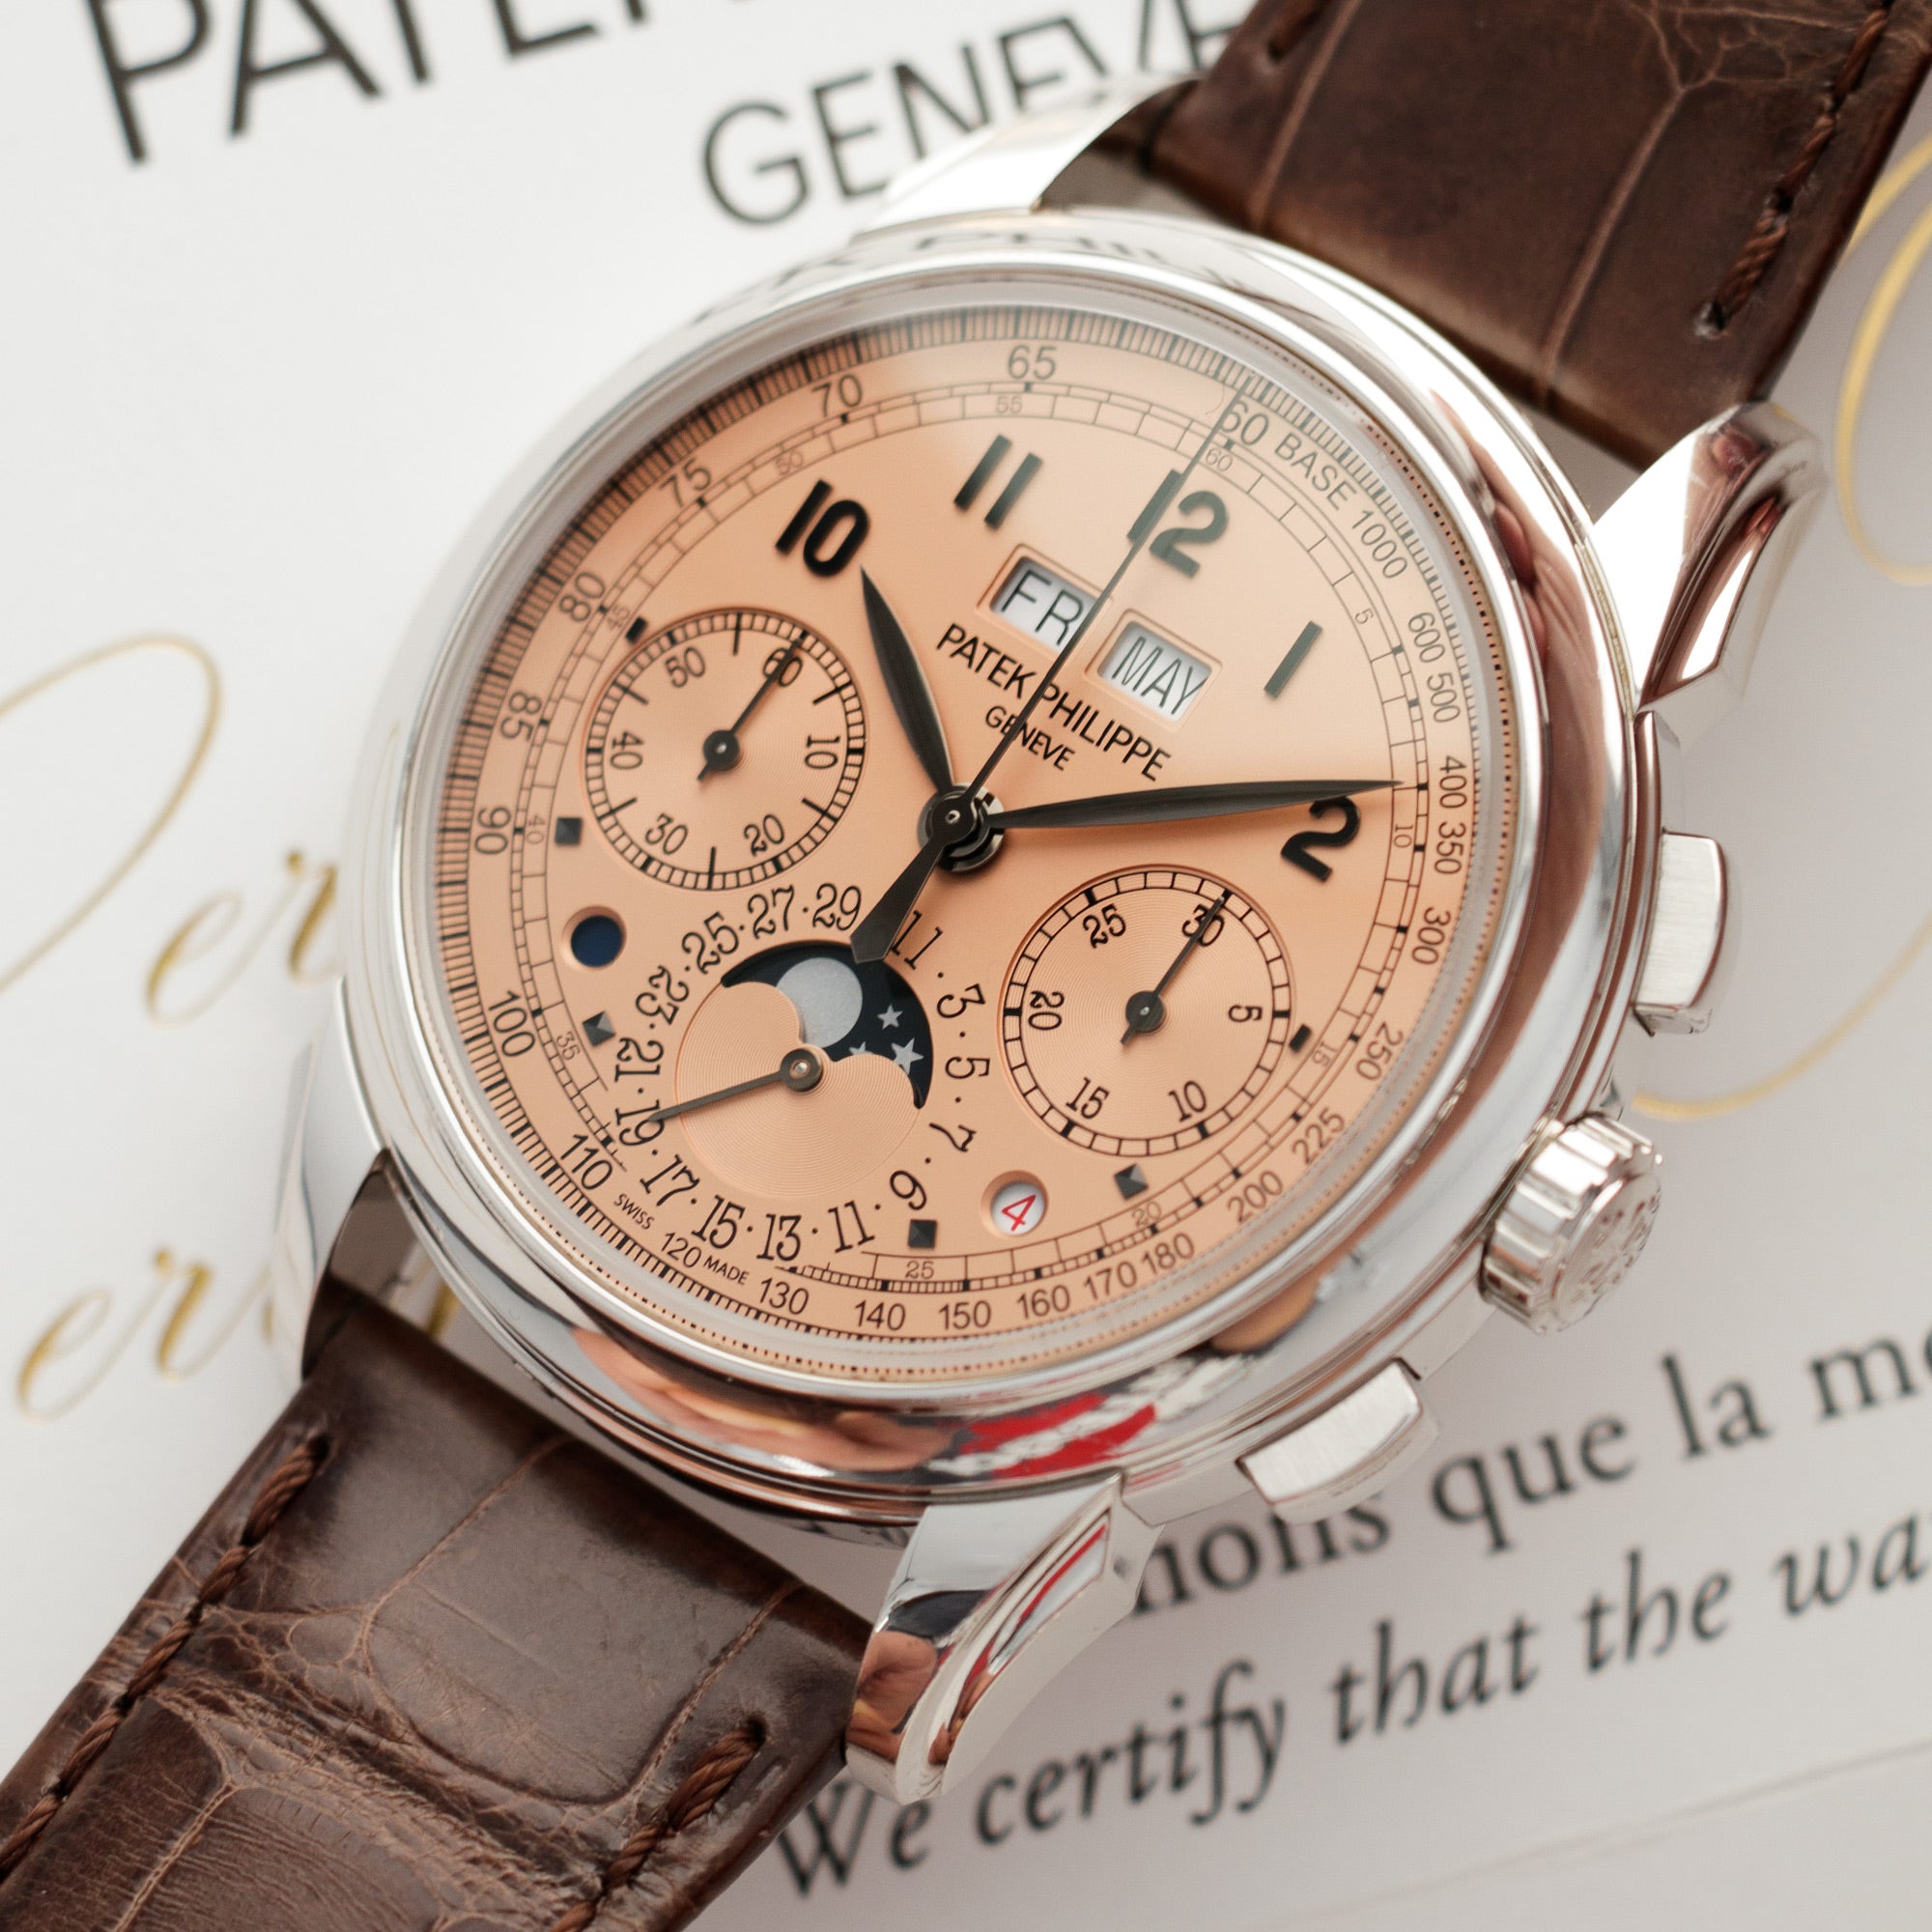 Patek Philippe - Patek Philippe Platinum Perpetual Calendar Chrono Watch Ref. 5270 - The Keystone Watches